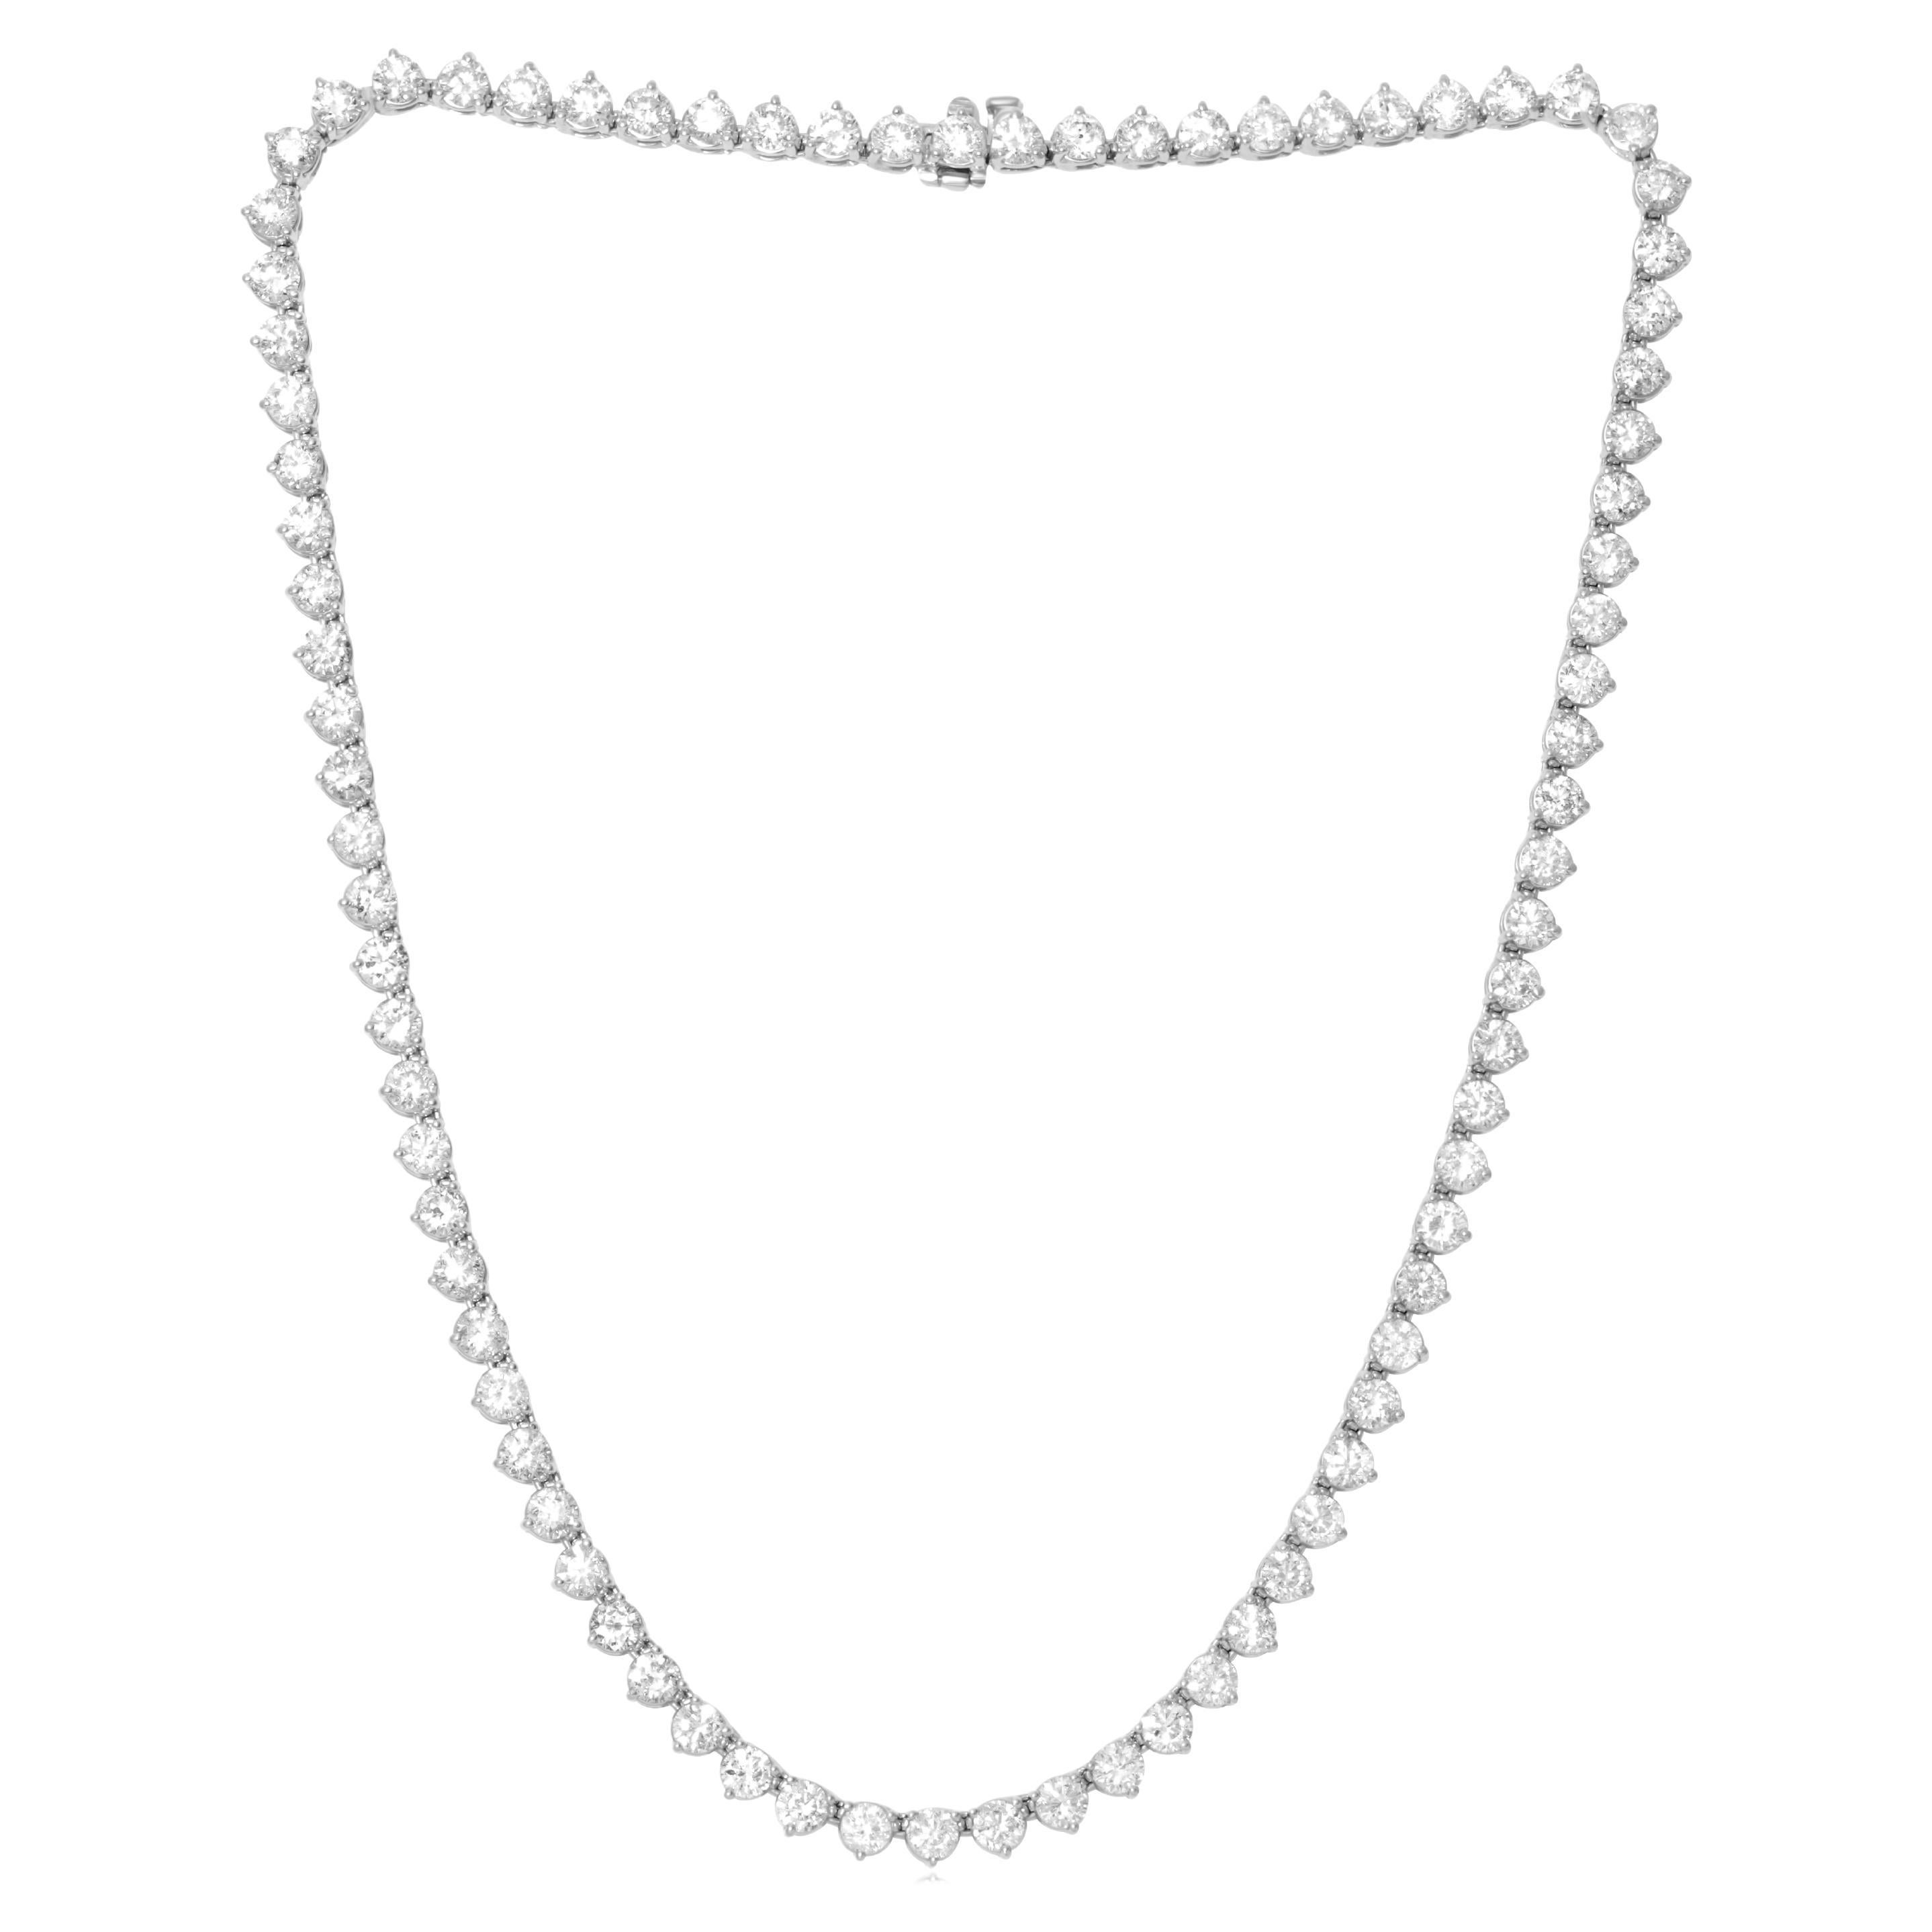 Diana M. Custom 10.00 cts 3 prong diamond 18k white gold tennis necklace 16.5"